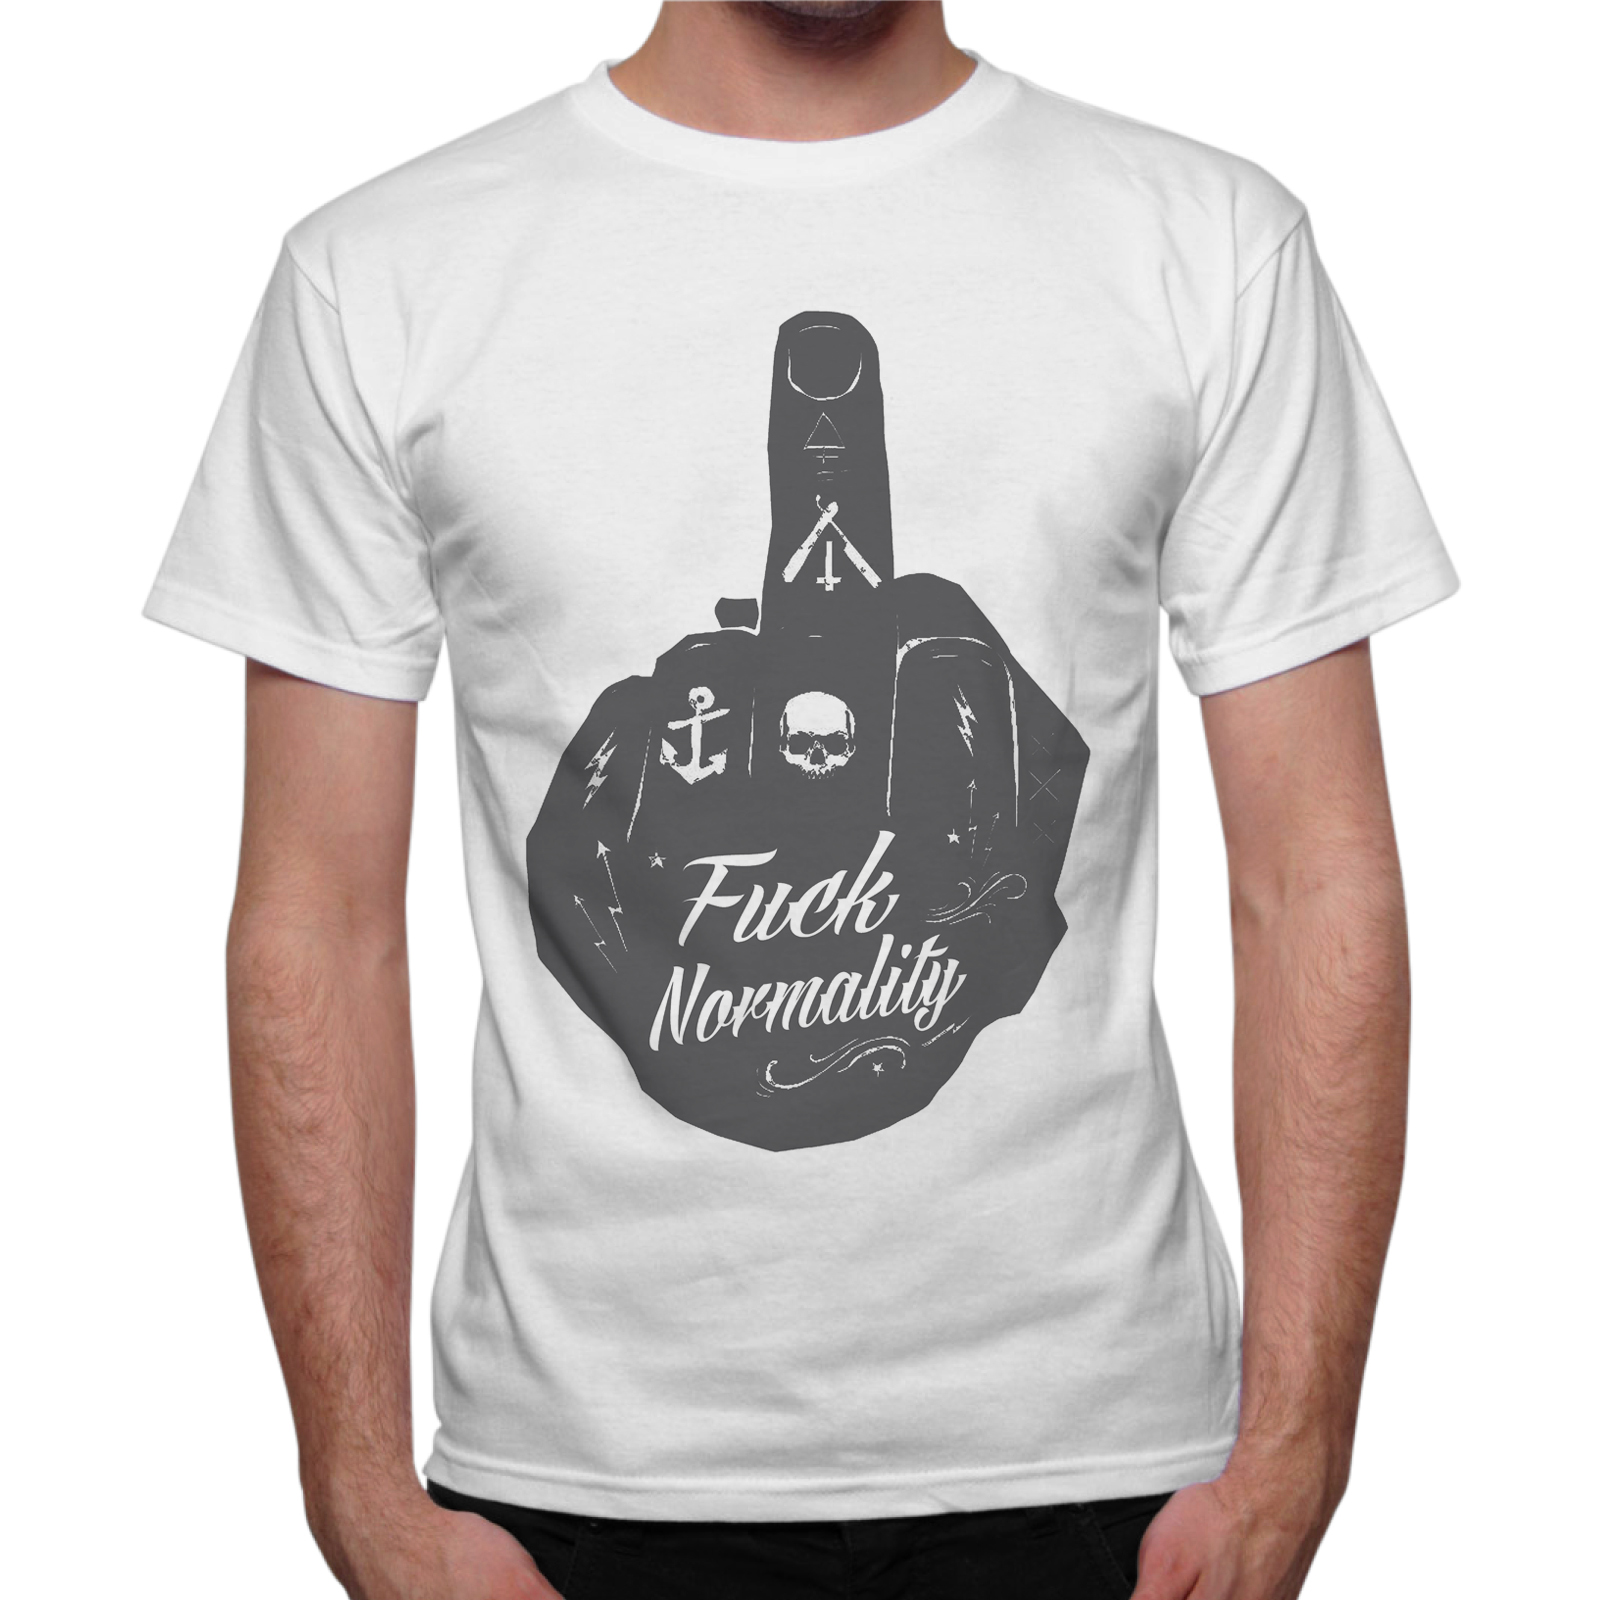 T-Shirt Uomo FU*K NORMALITY 1